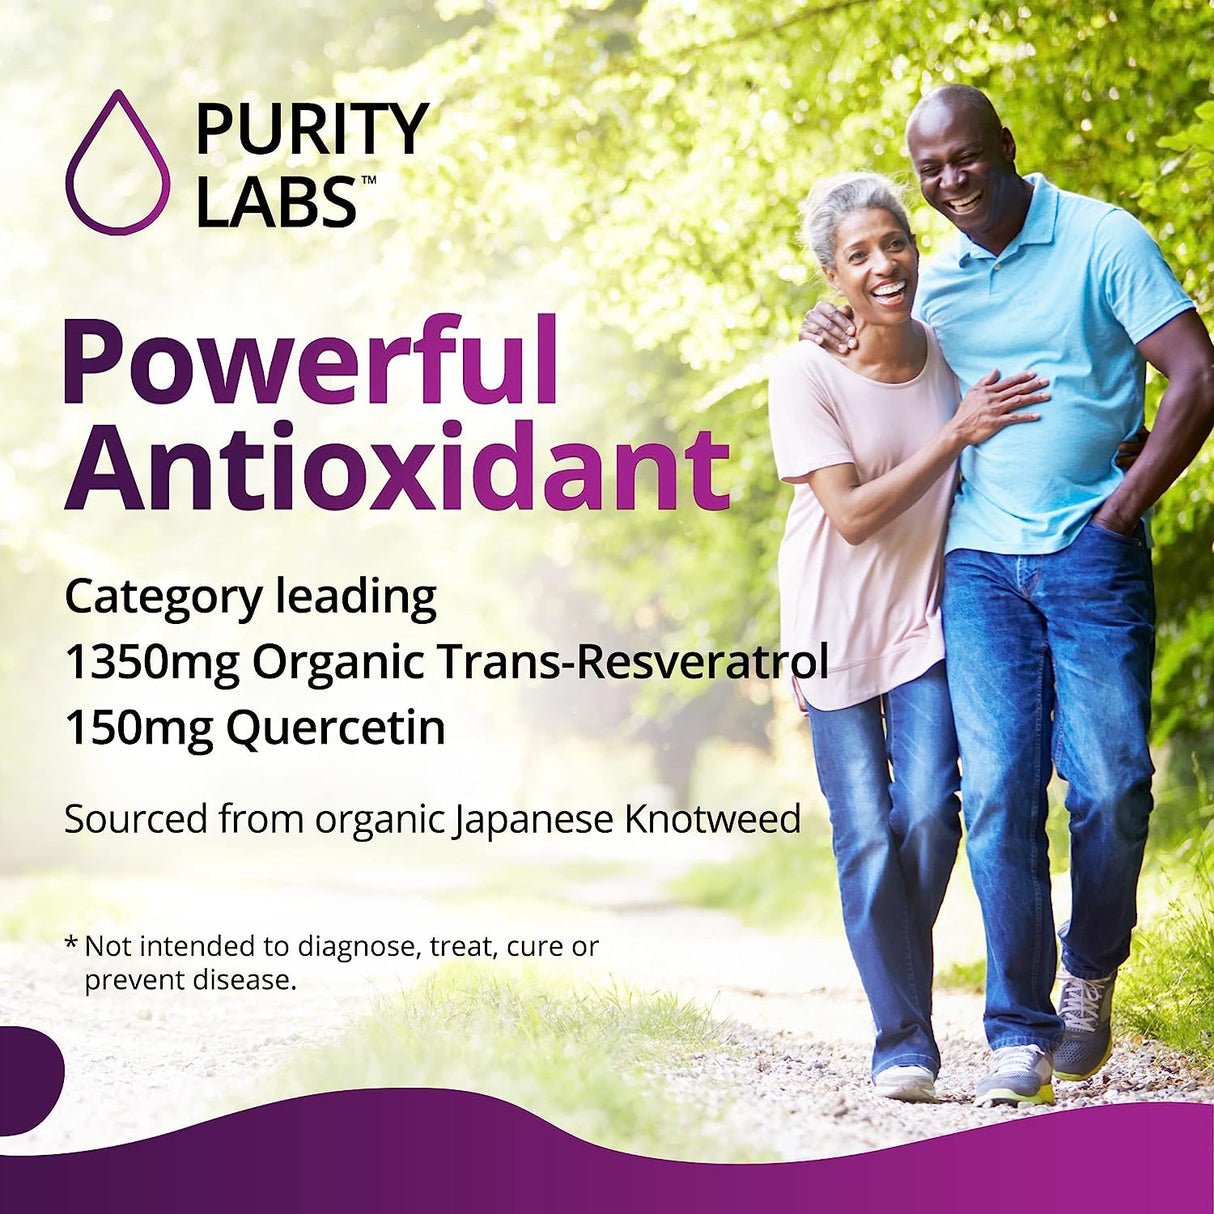 Purity Labs Pure Organic Trans-Resveratrol 90 Capsulas